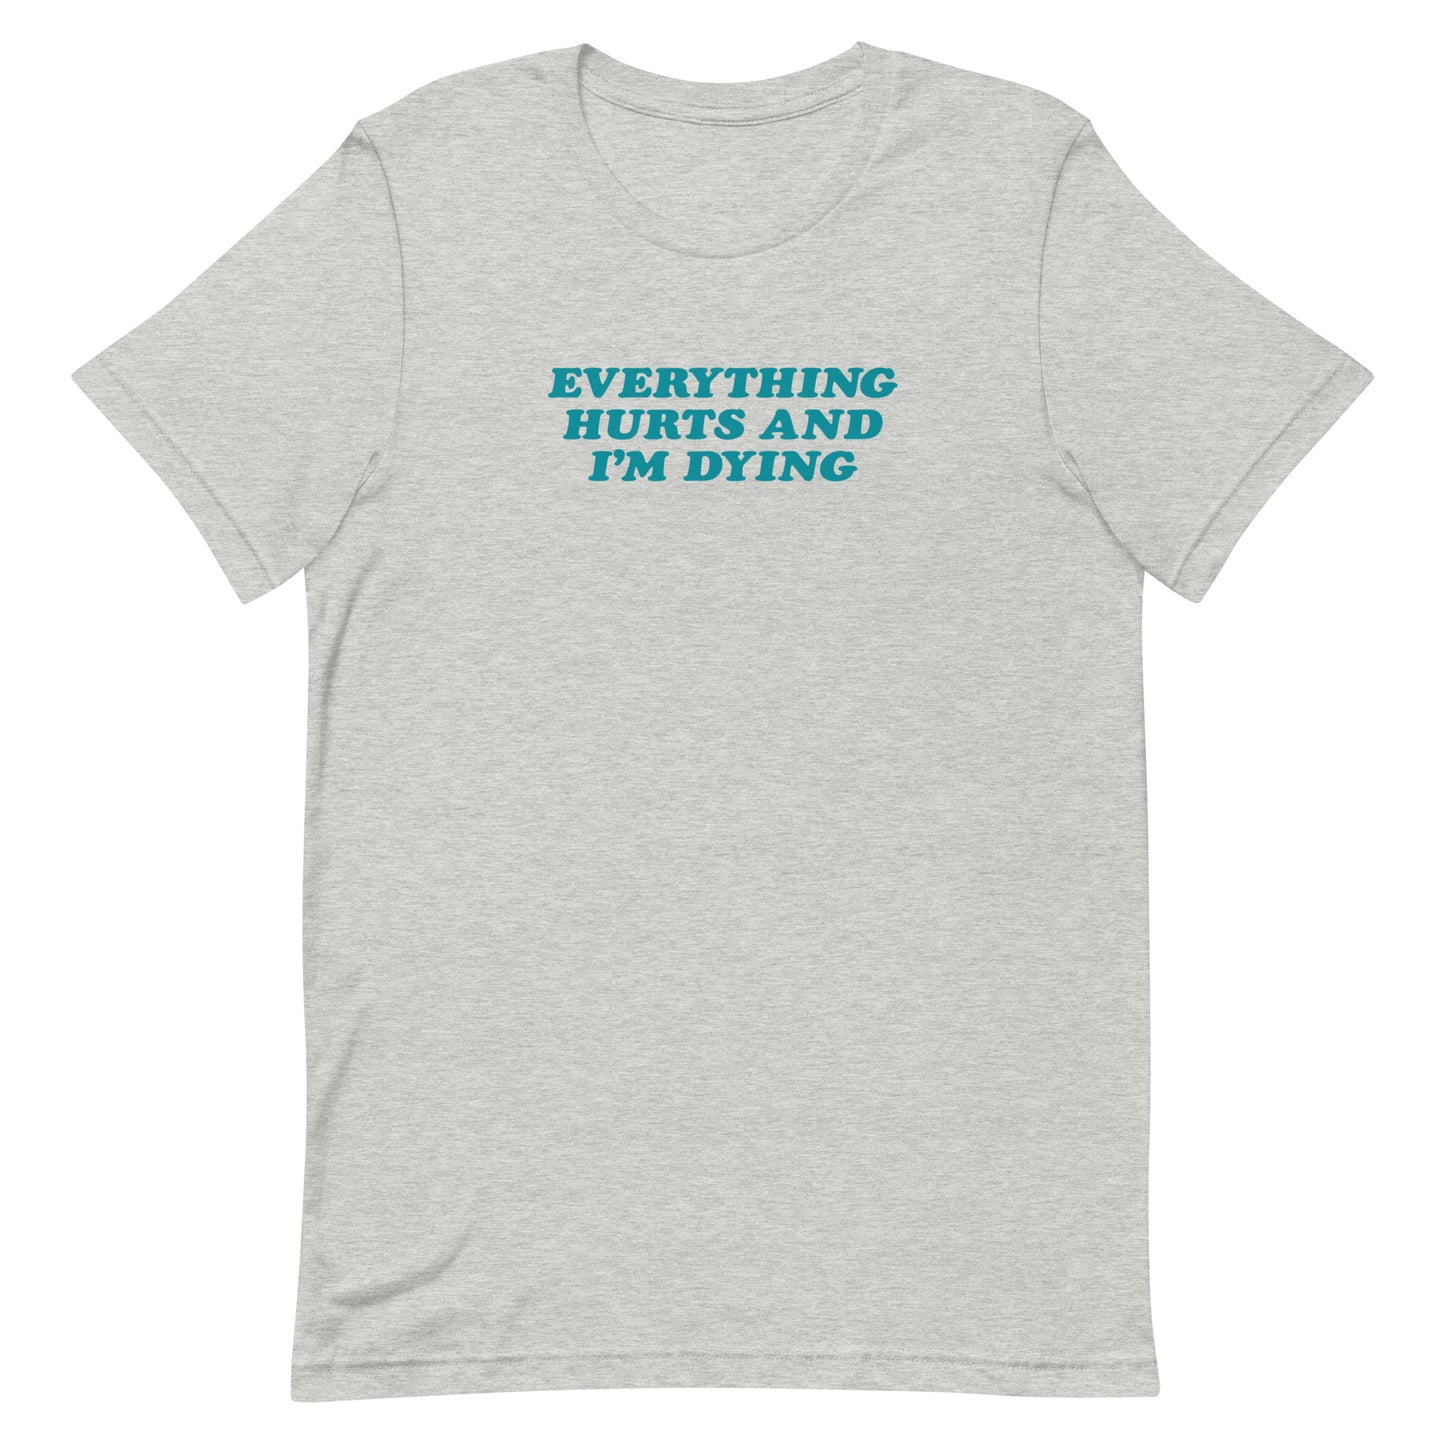 "Everything hurts" shirt